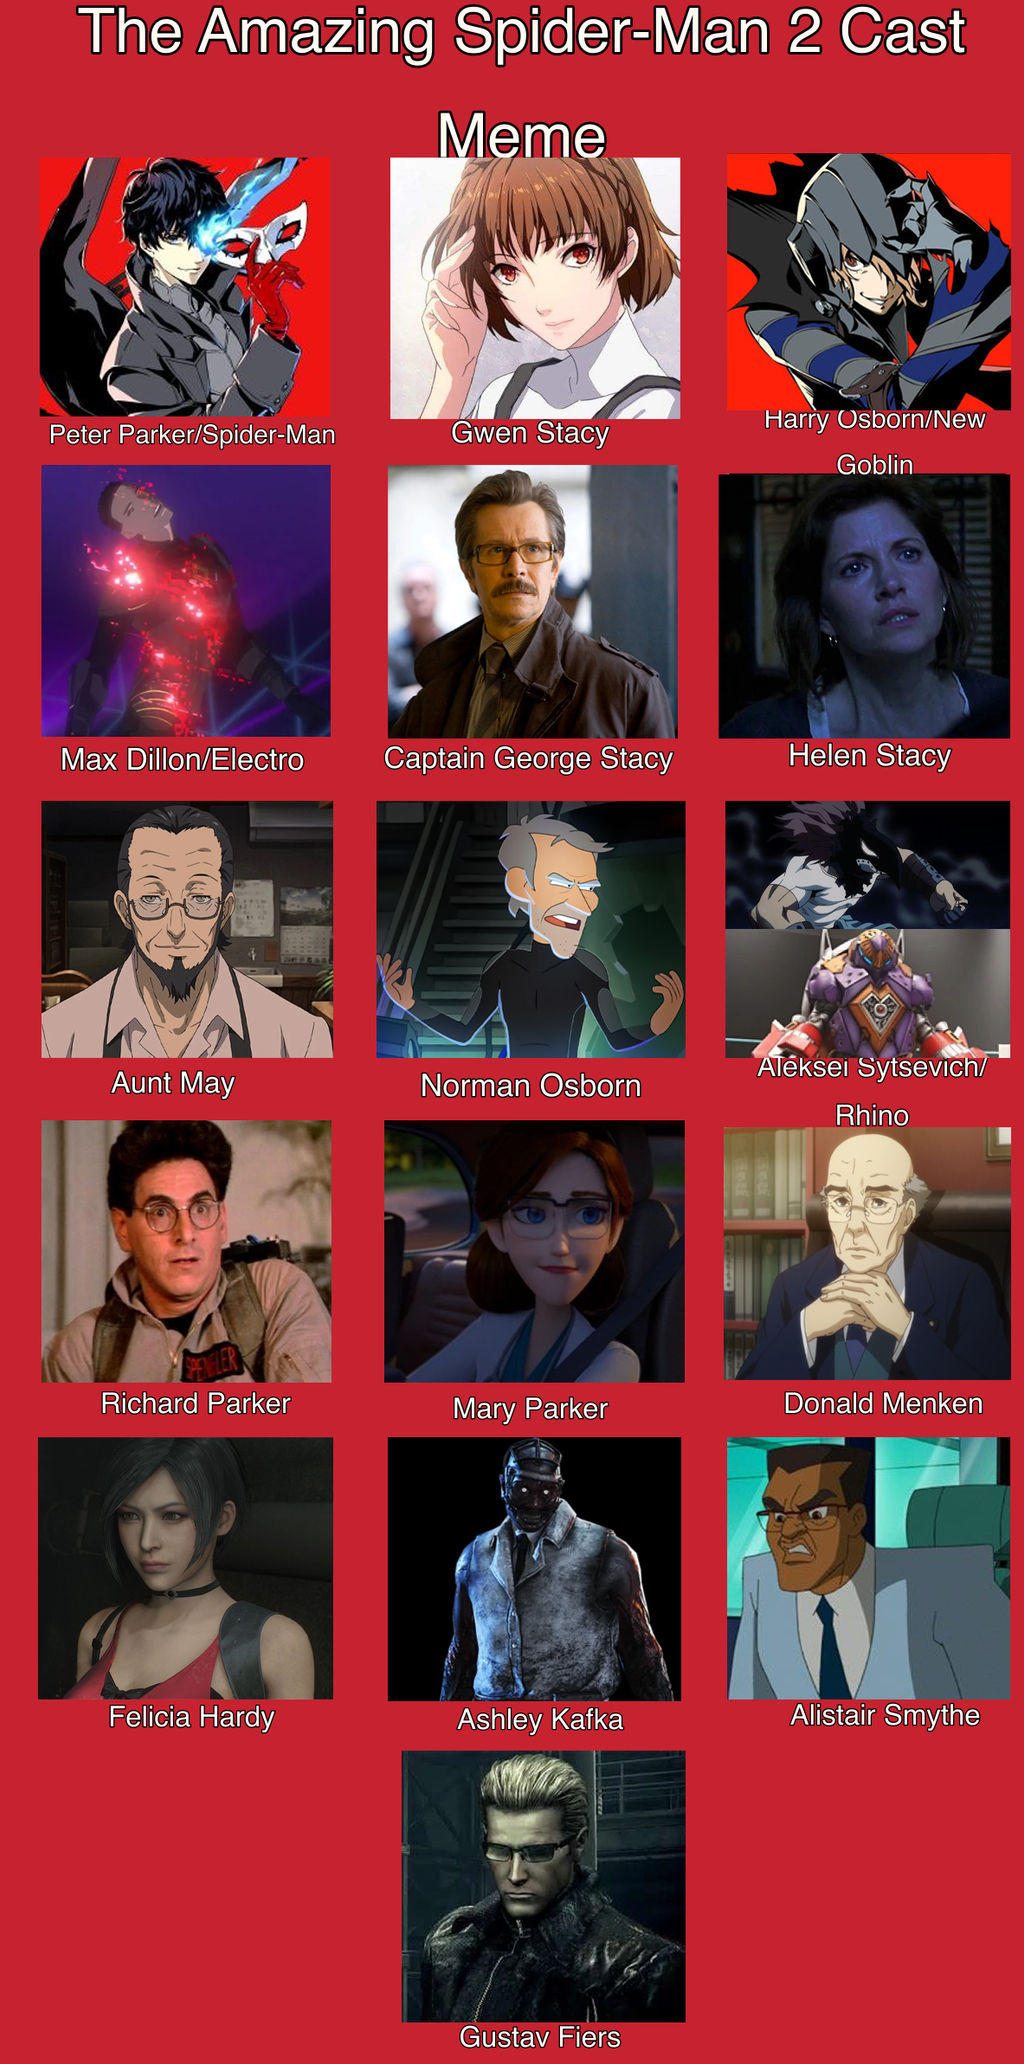 My The Amazing Spider-Man 2 Cast by JackSkellington416 on DeviantArt